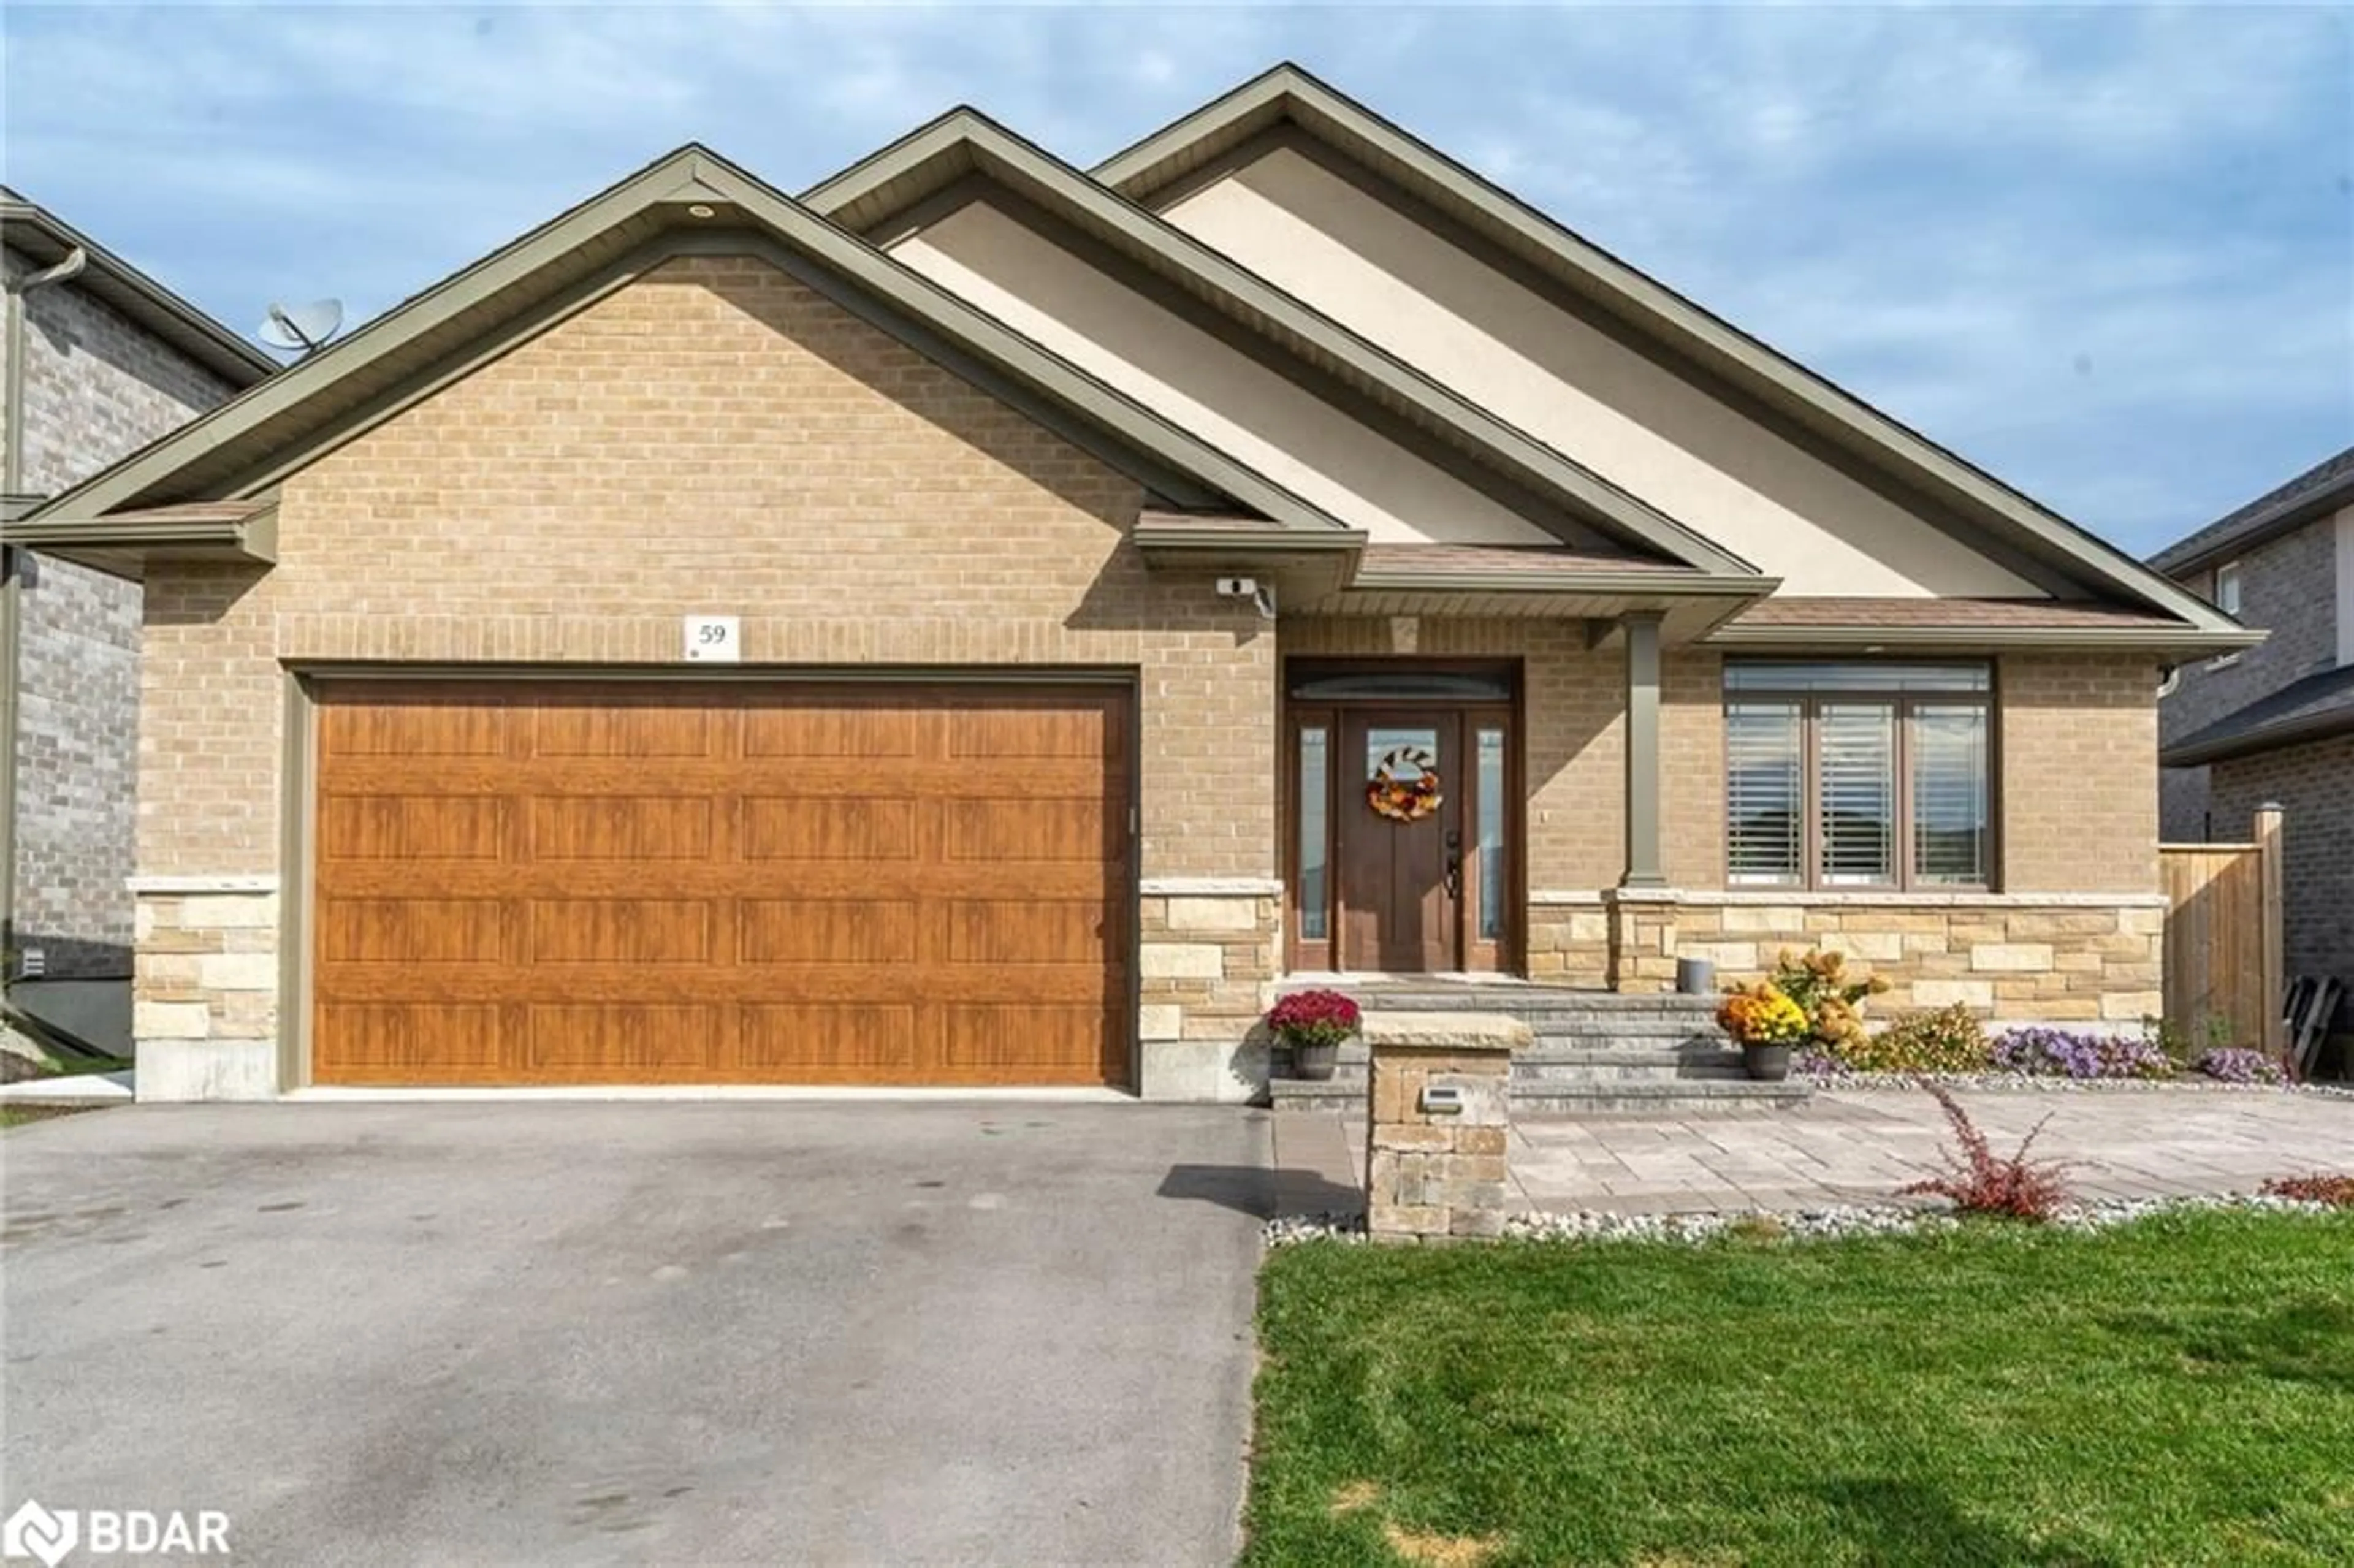 Home with brick exterior material for 59 Hampton Ridge Dr, Belleville Ontario K8N 0E6